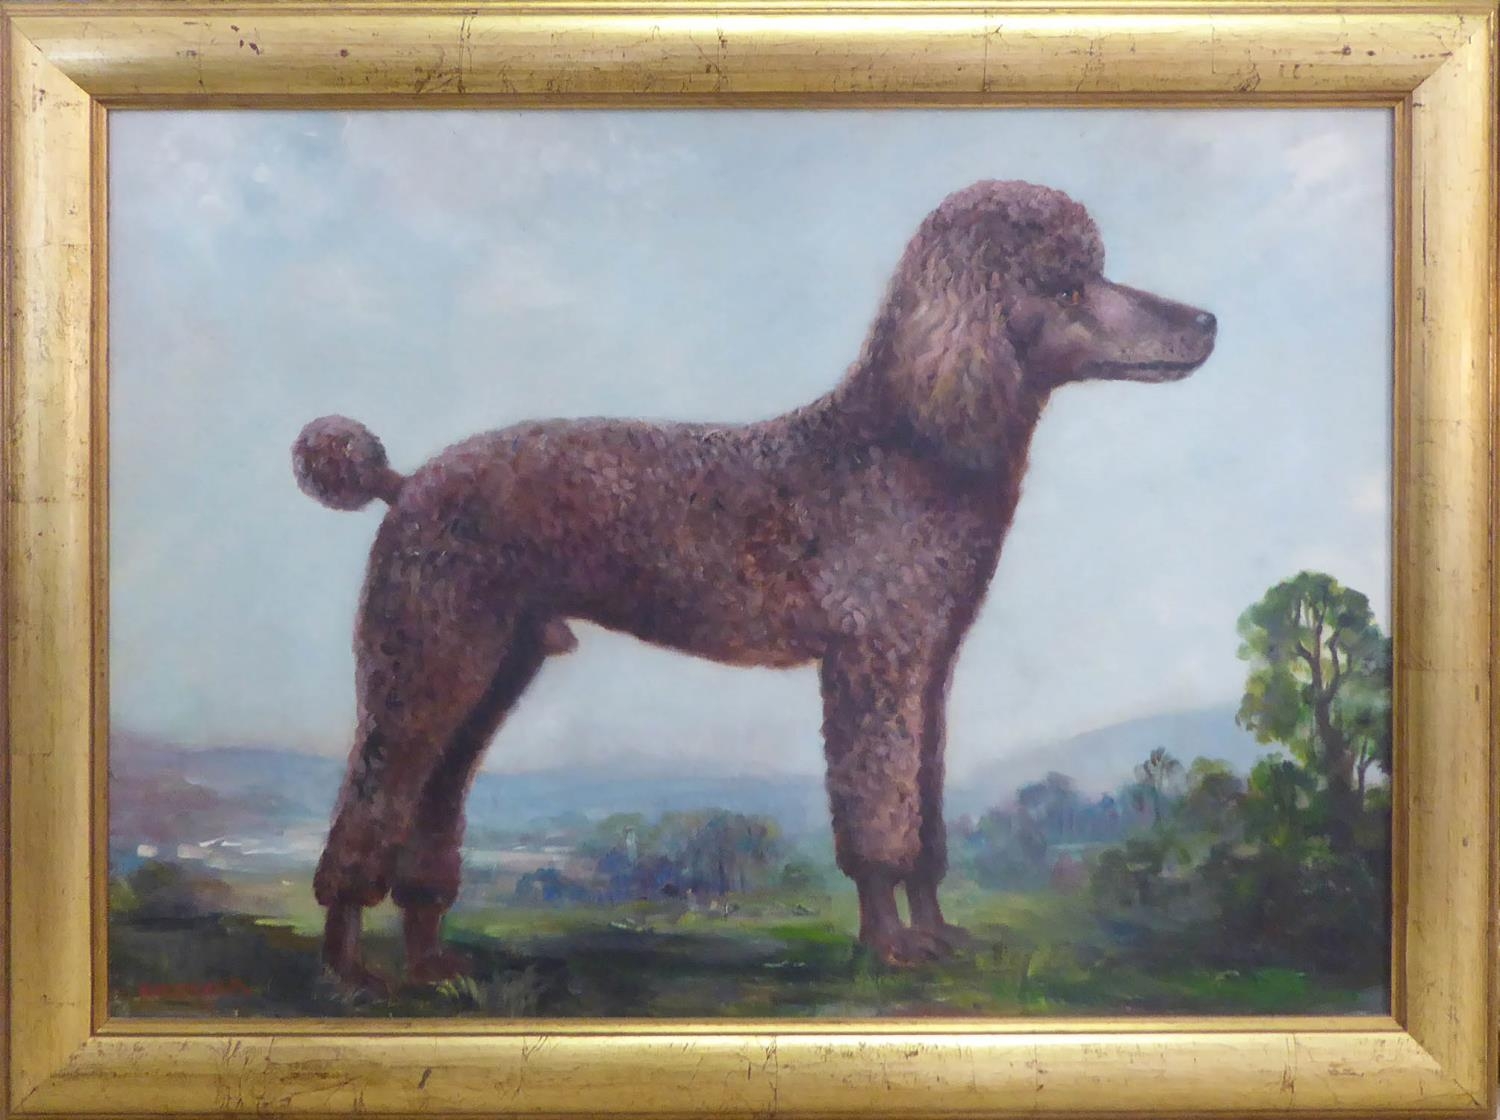 HARDACKER 'Portrait of a poodle', oil on canvas, signed lower left, 50cm x 60cm, framed.